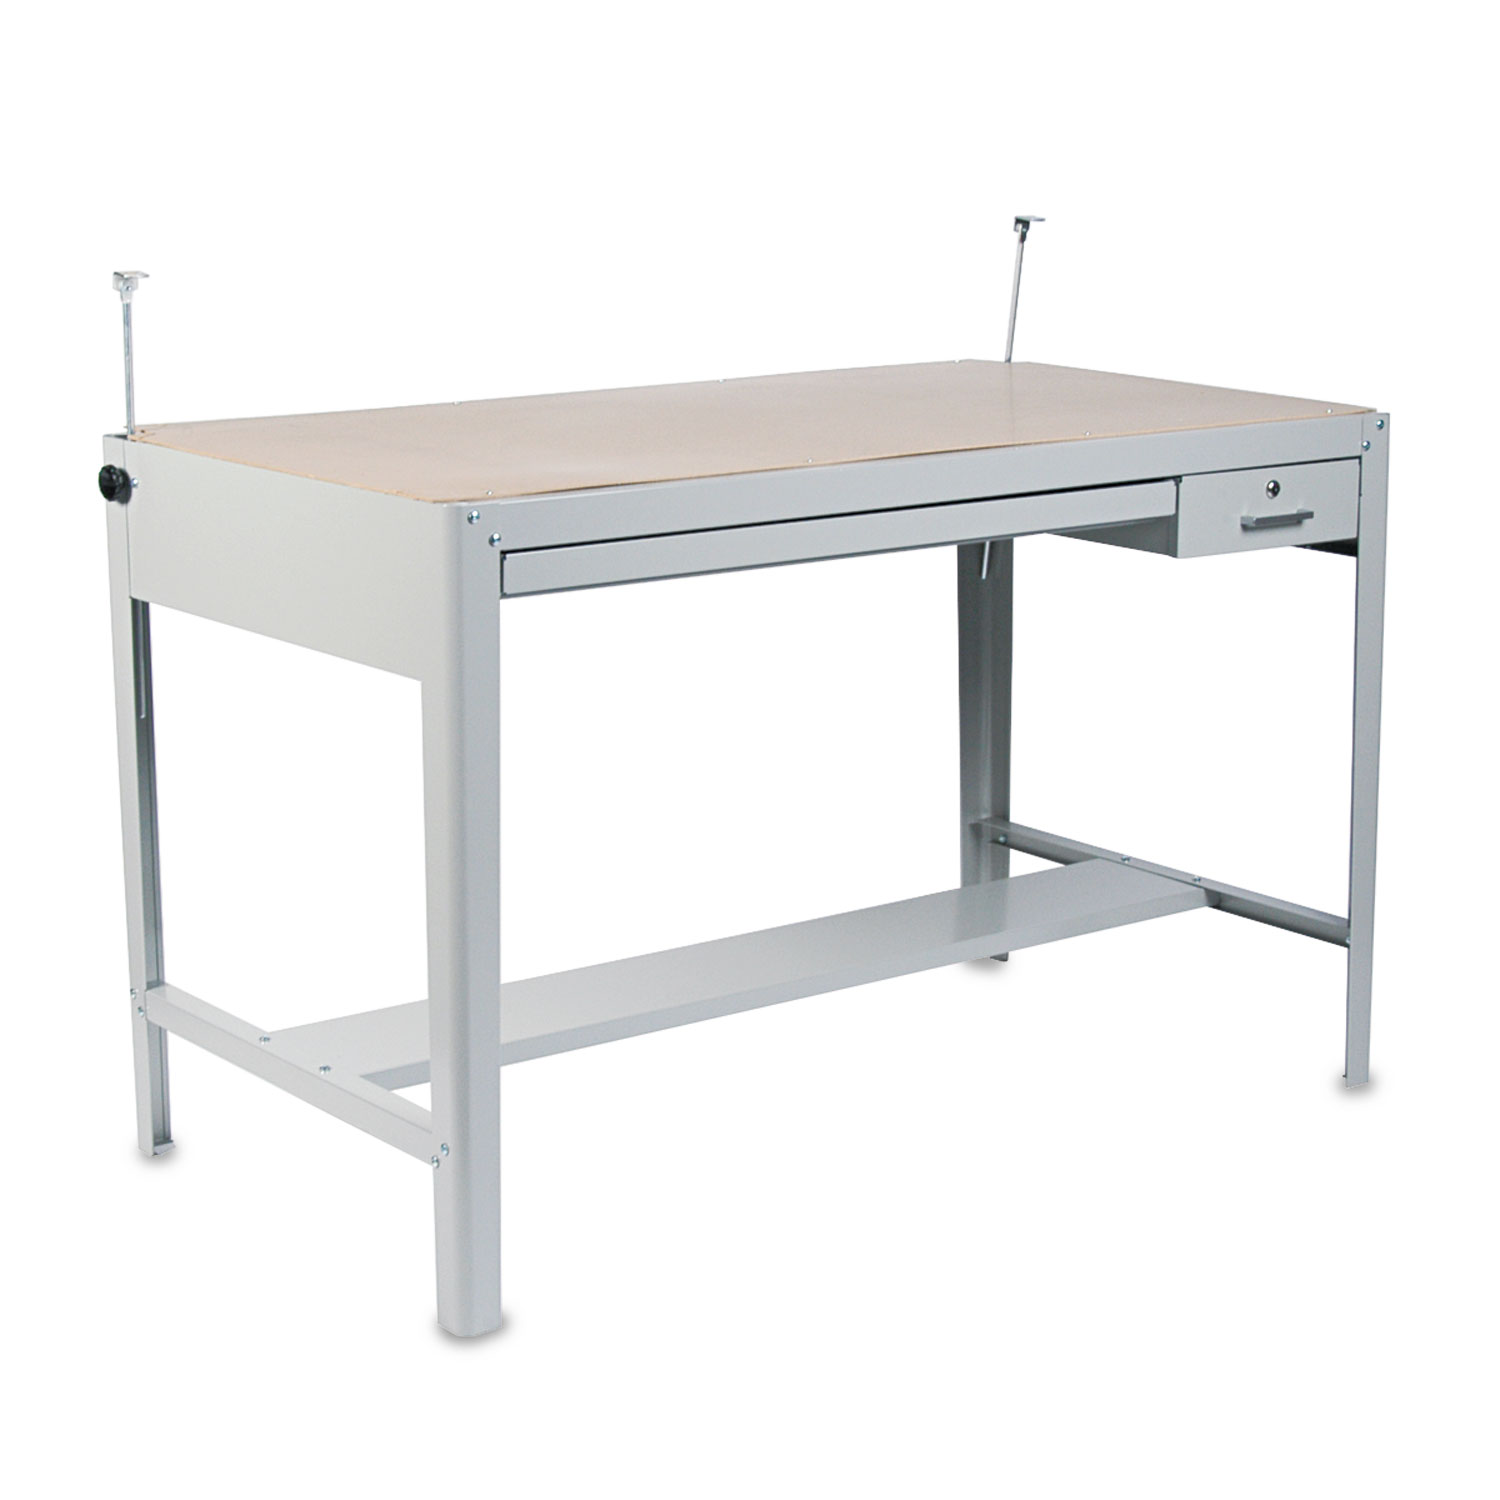  Safco 3962GR Precision Four-Post Drafting Table Base, 56-1/2w x 30-1/2d x 35-1/2h, Gray (SAF3962GR) 